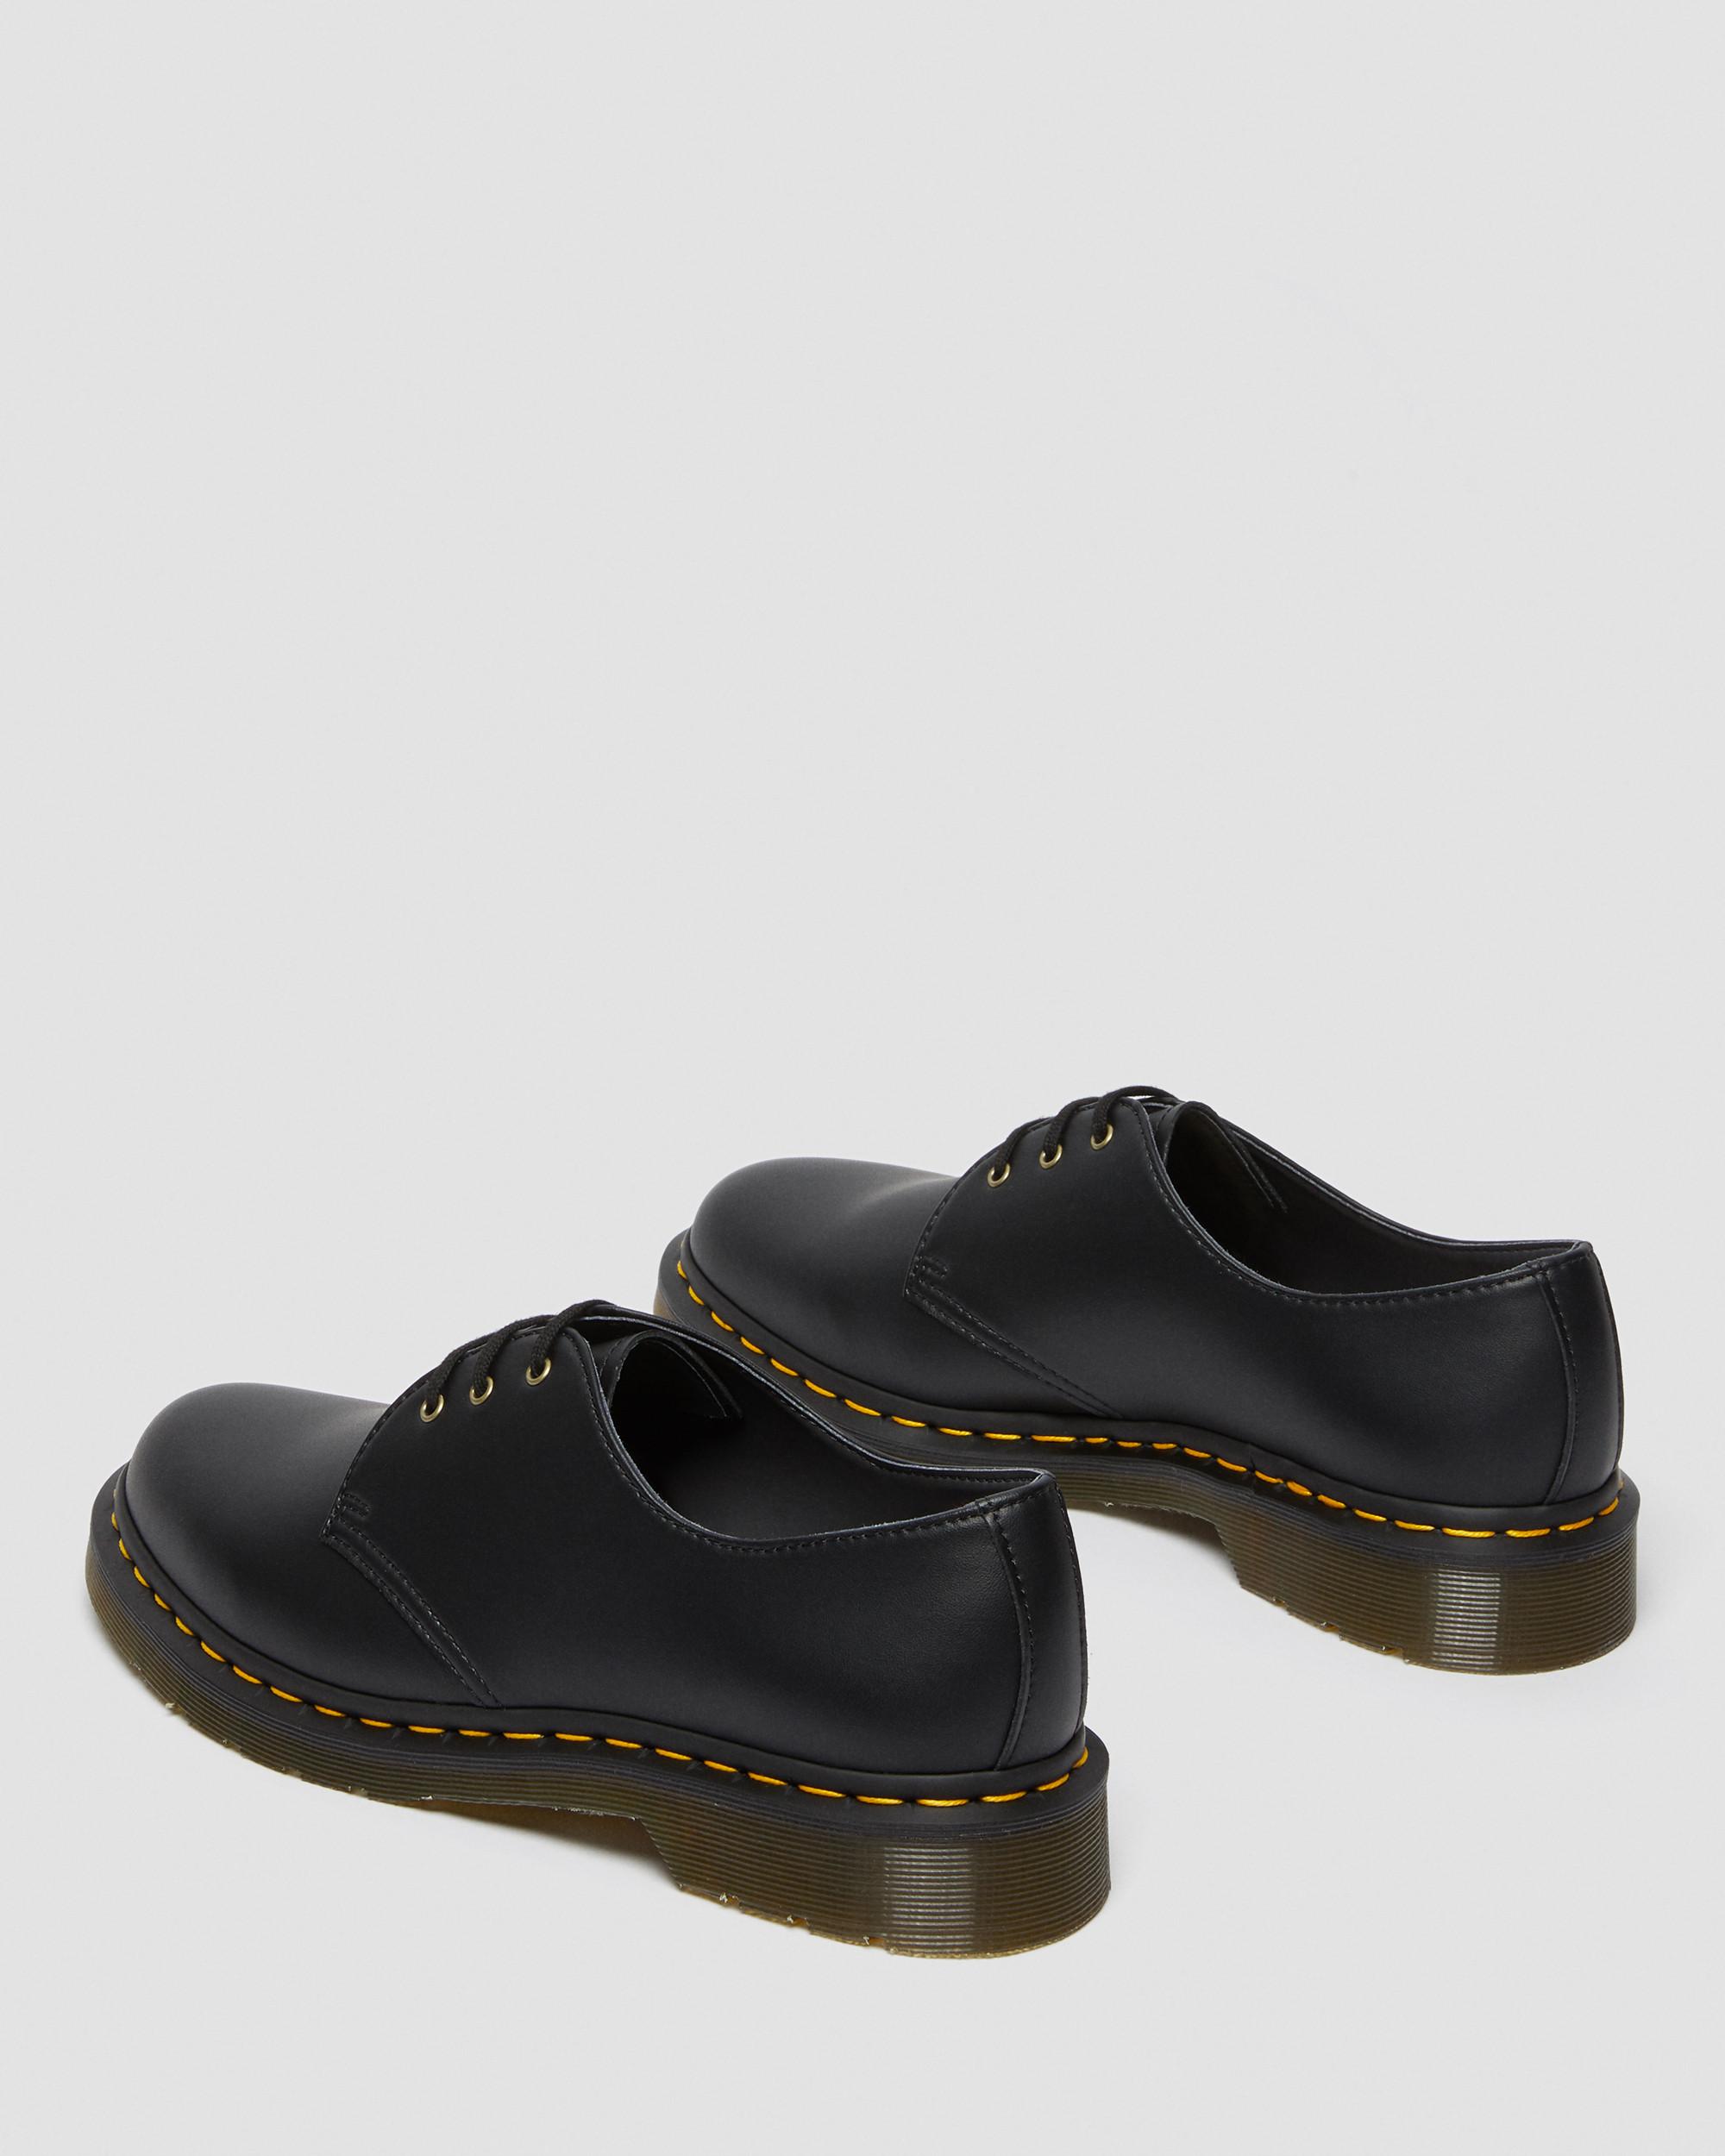 Vegan 1461 Felix Oxford Shoes in Black